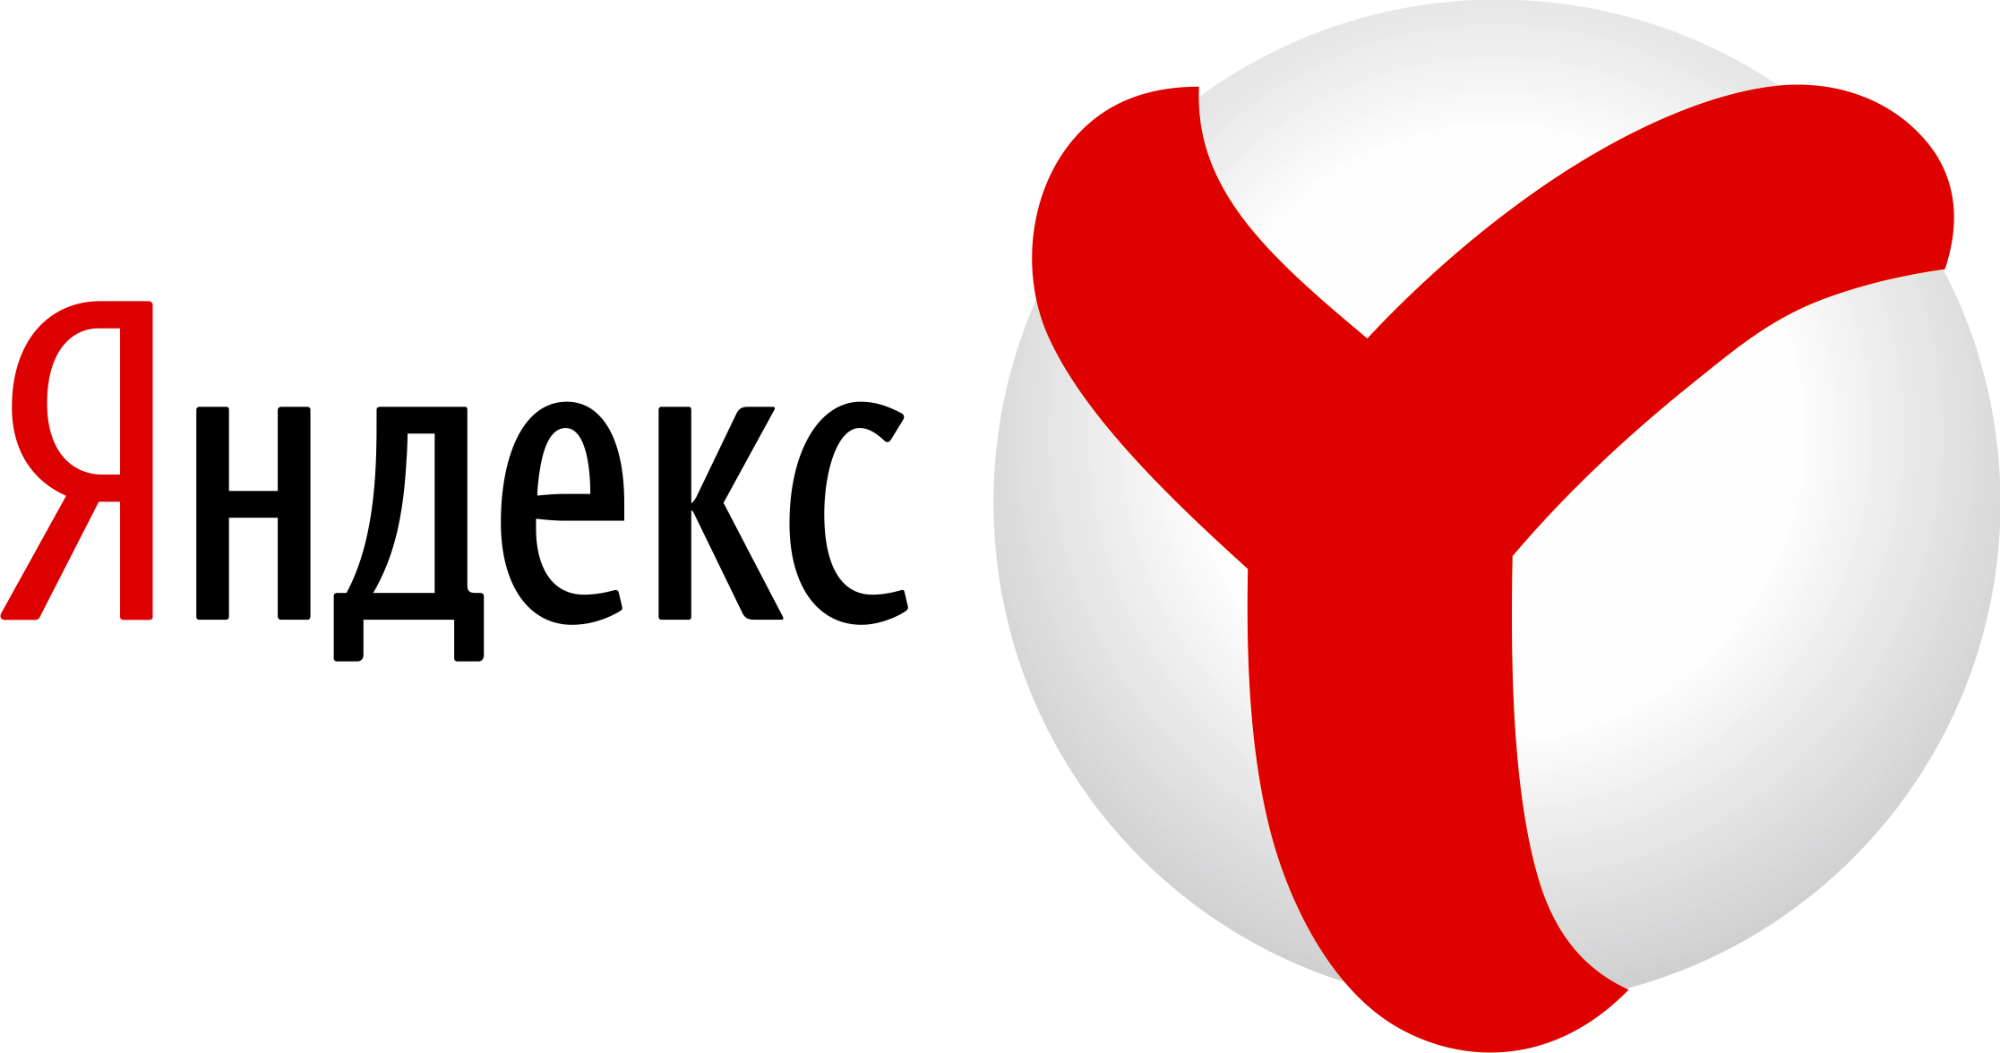 Yandex Logo PNG Transparent Yandex Logo.PNG Images. | PlusPNG